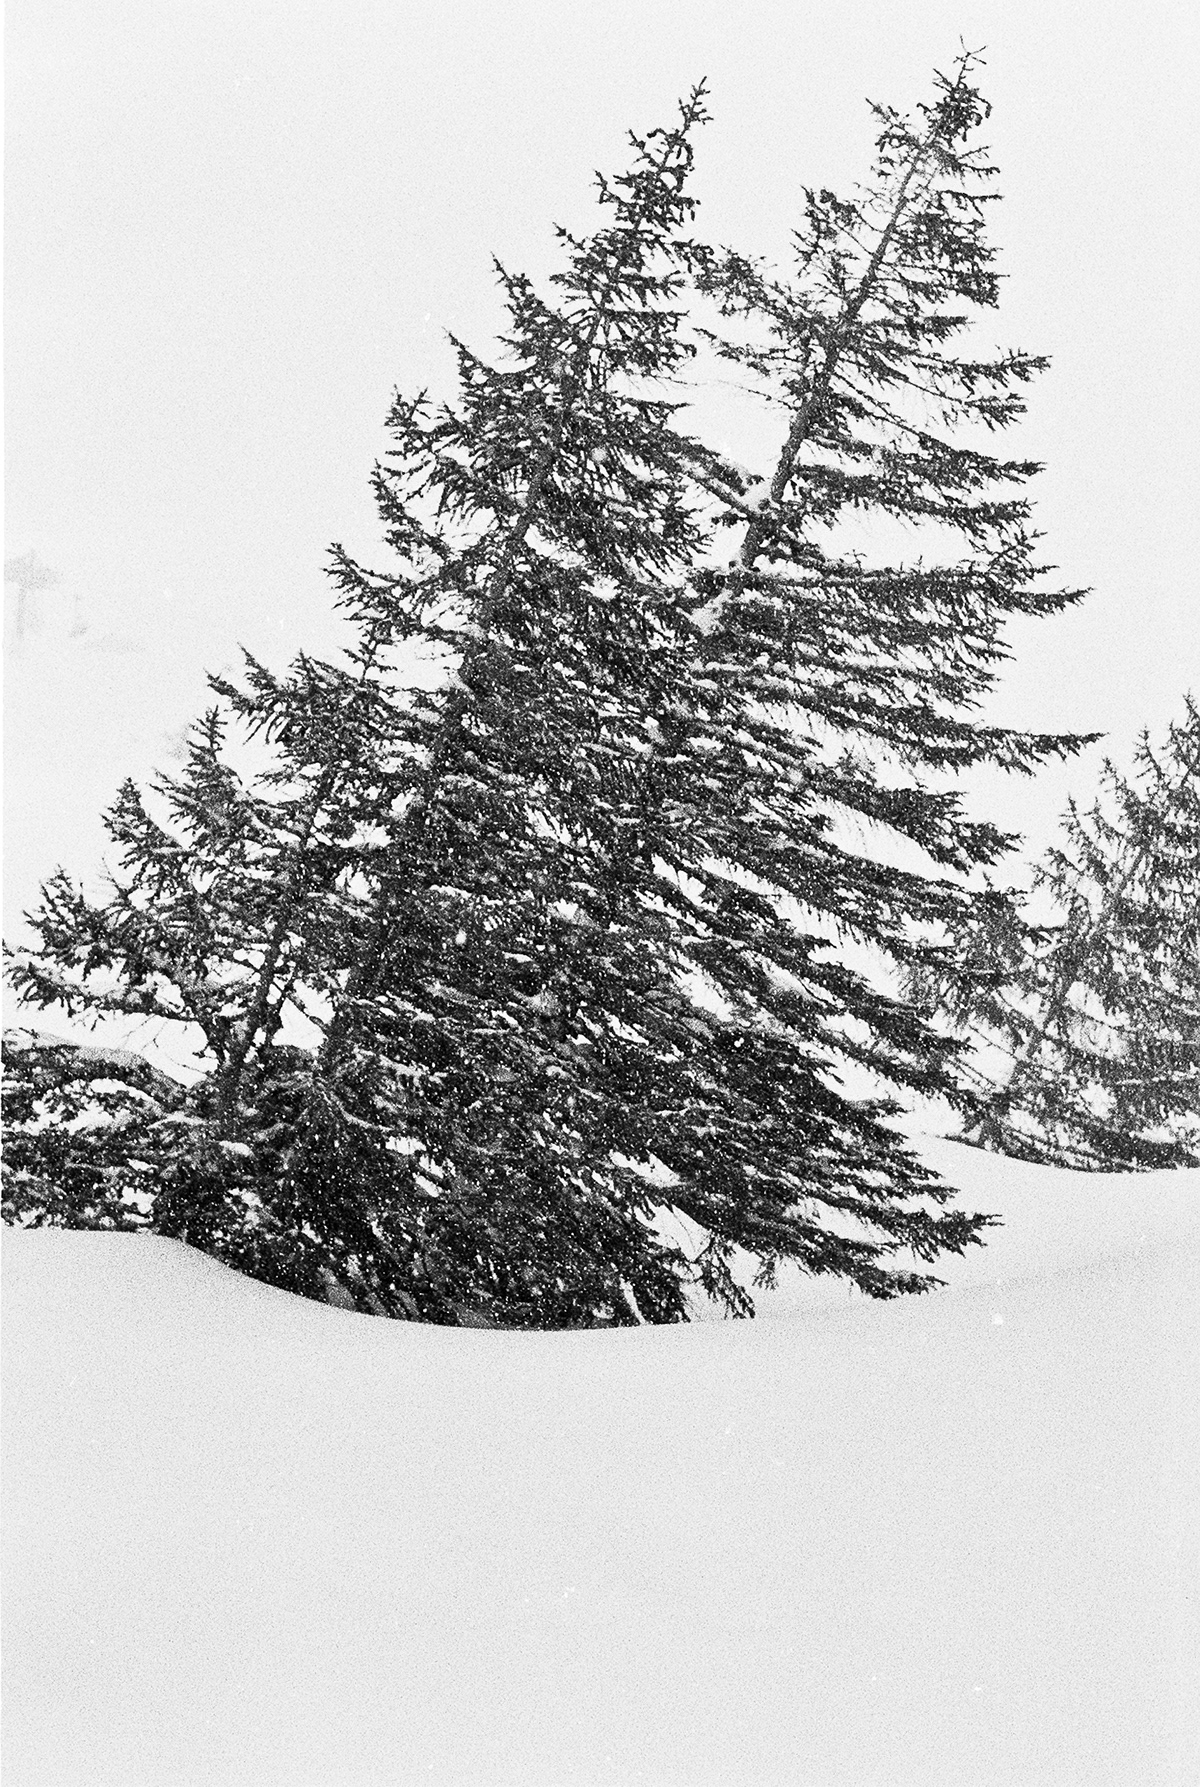 Snowboarding shot on film black and white